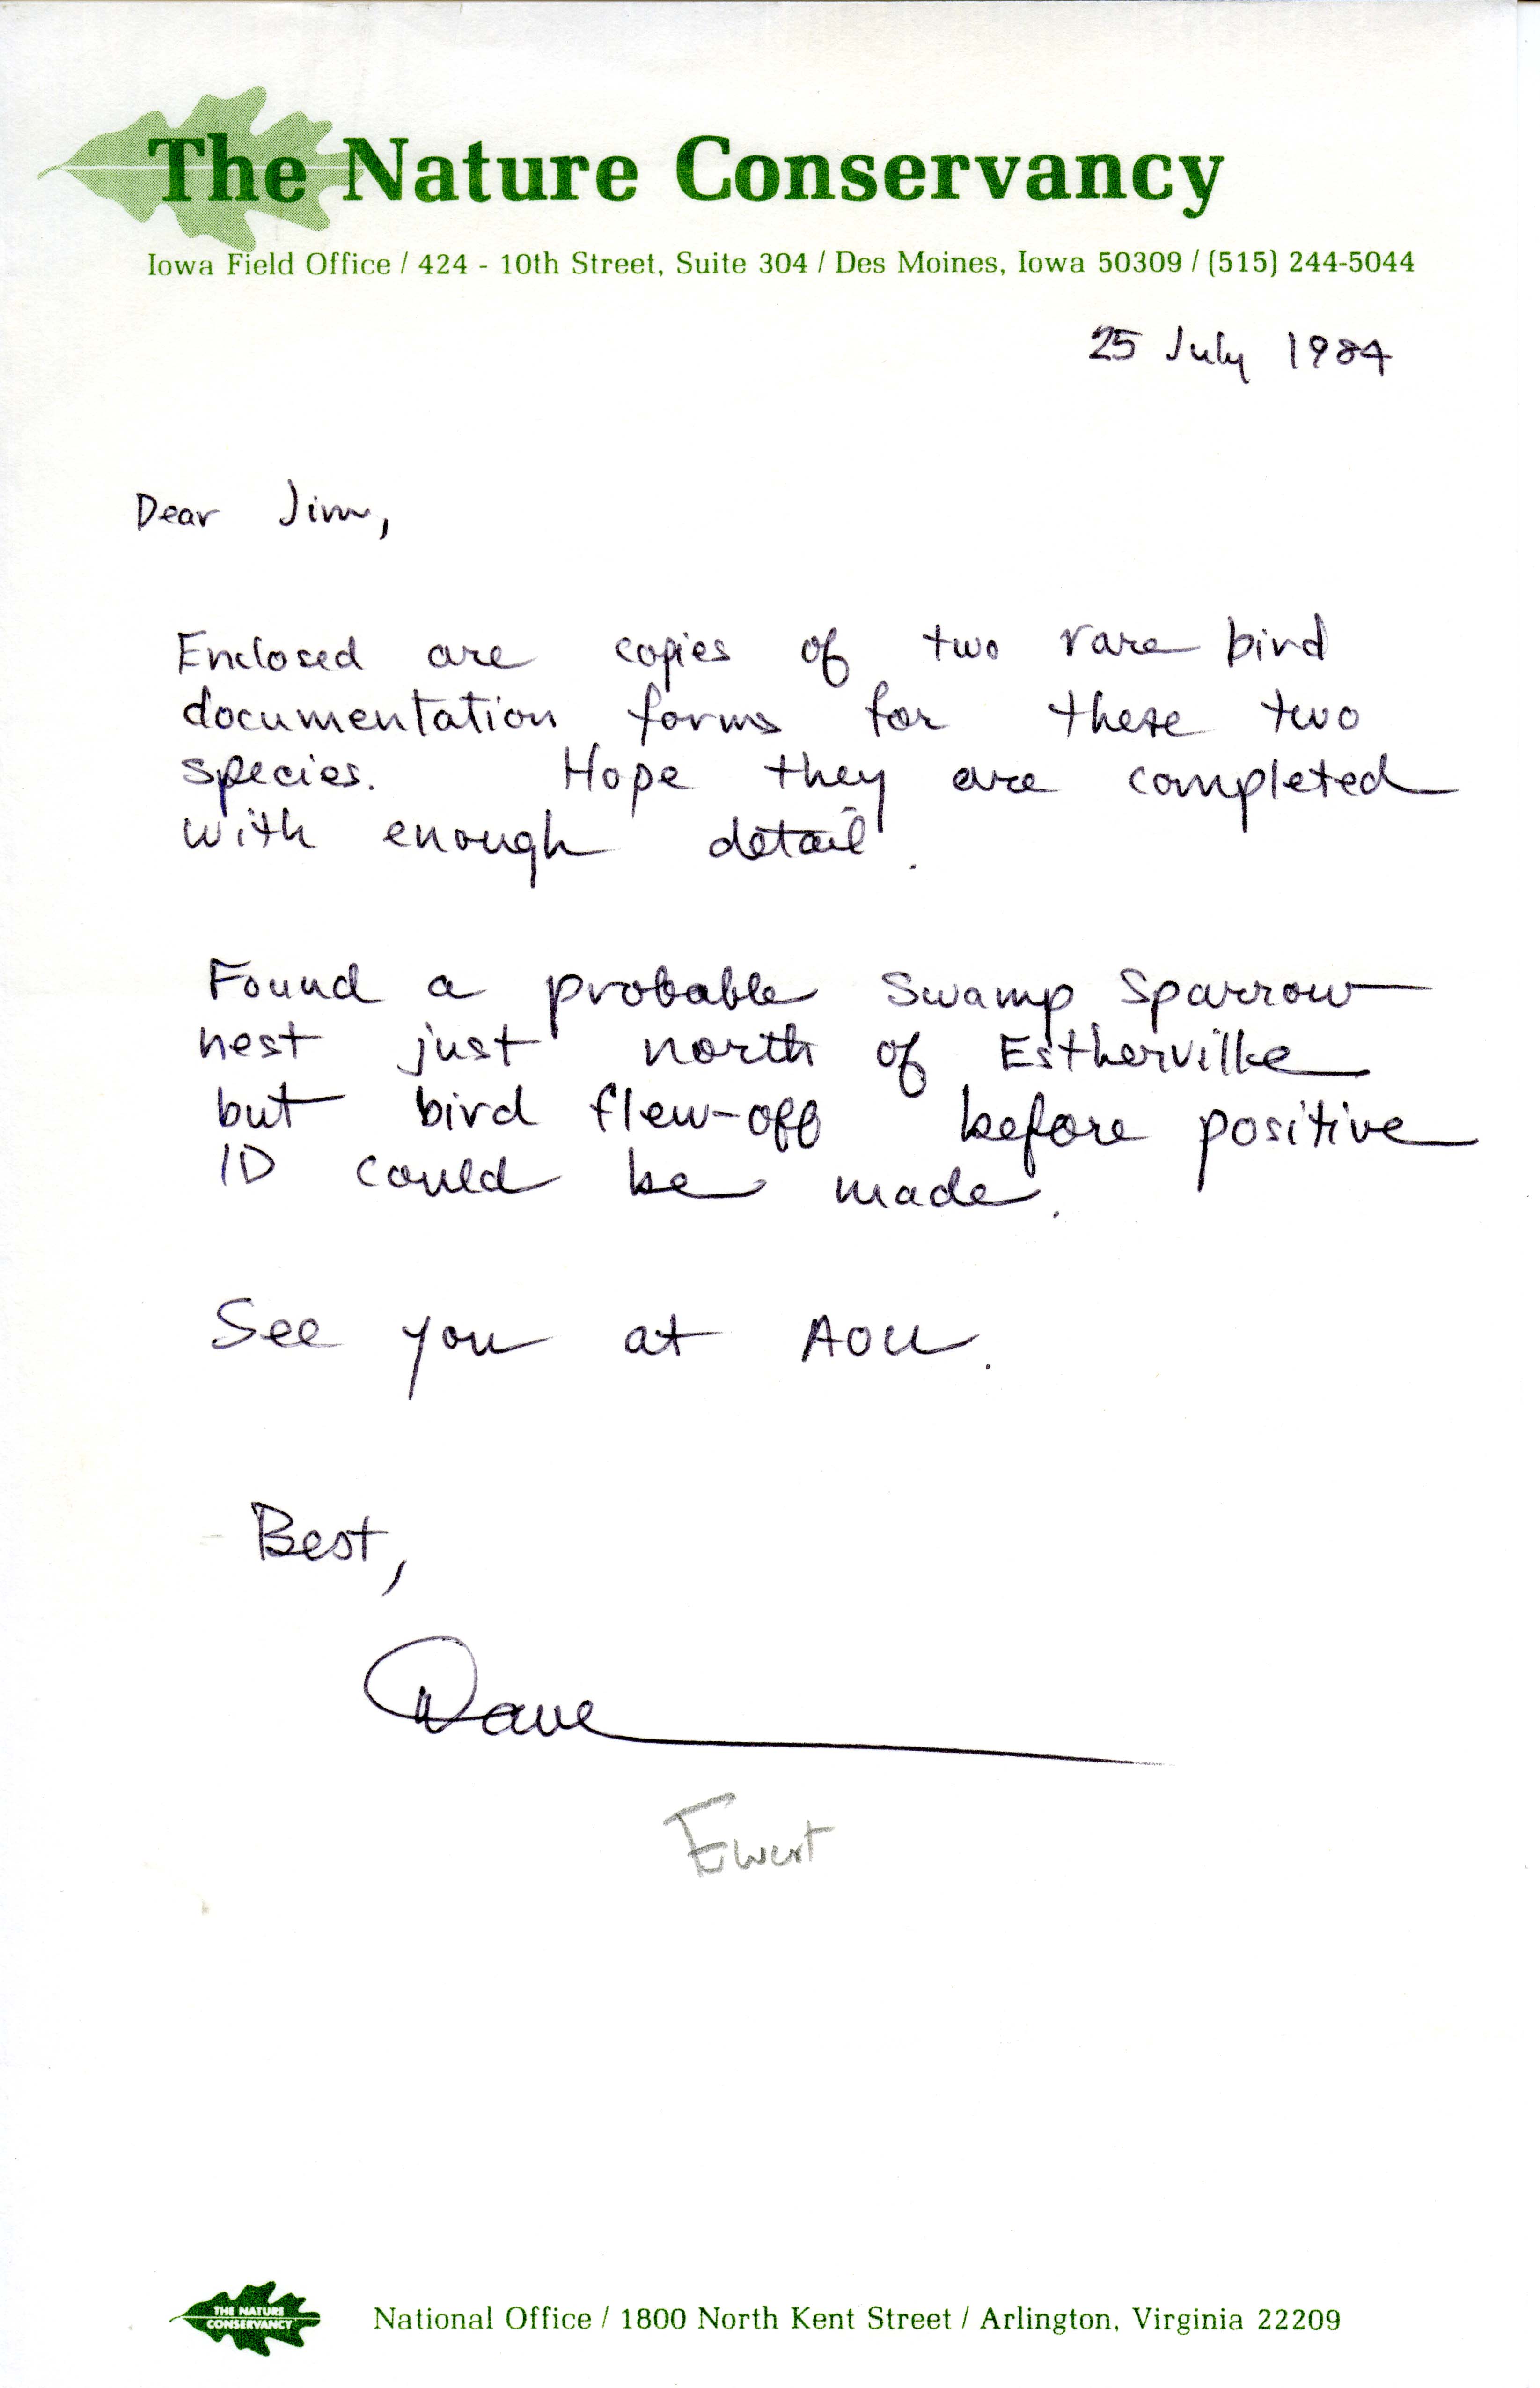 David Ewert letter to James J. Dinsmore regarding rare bird documentation, July 25, 1984